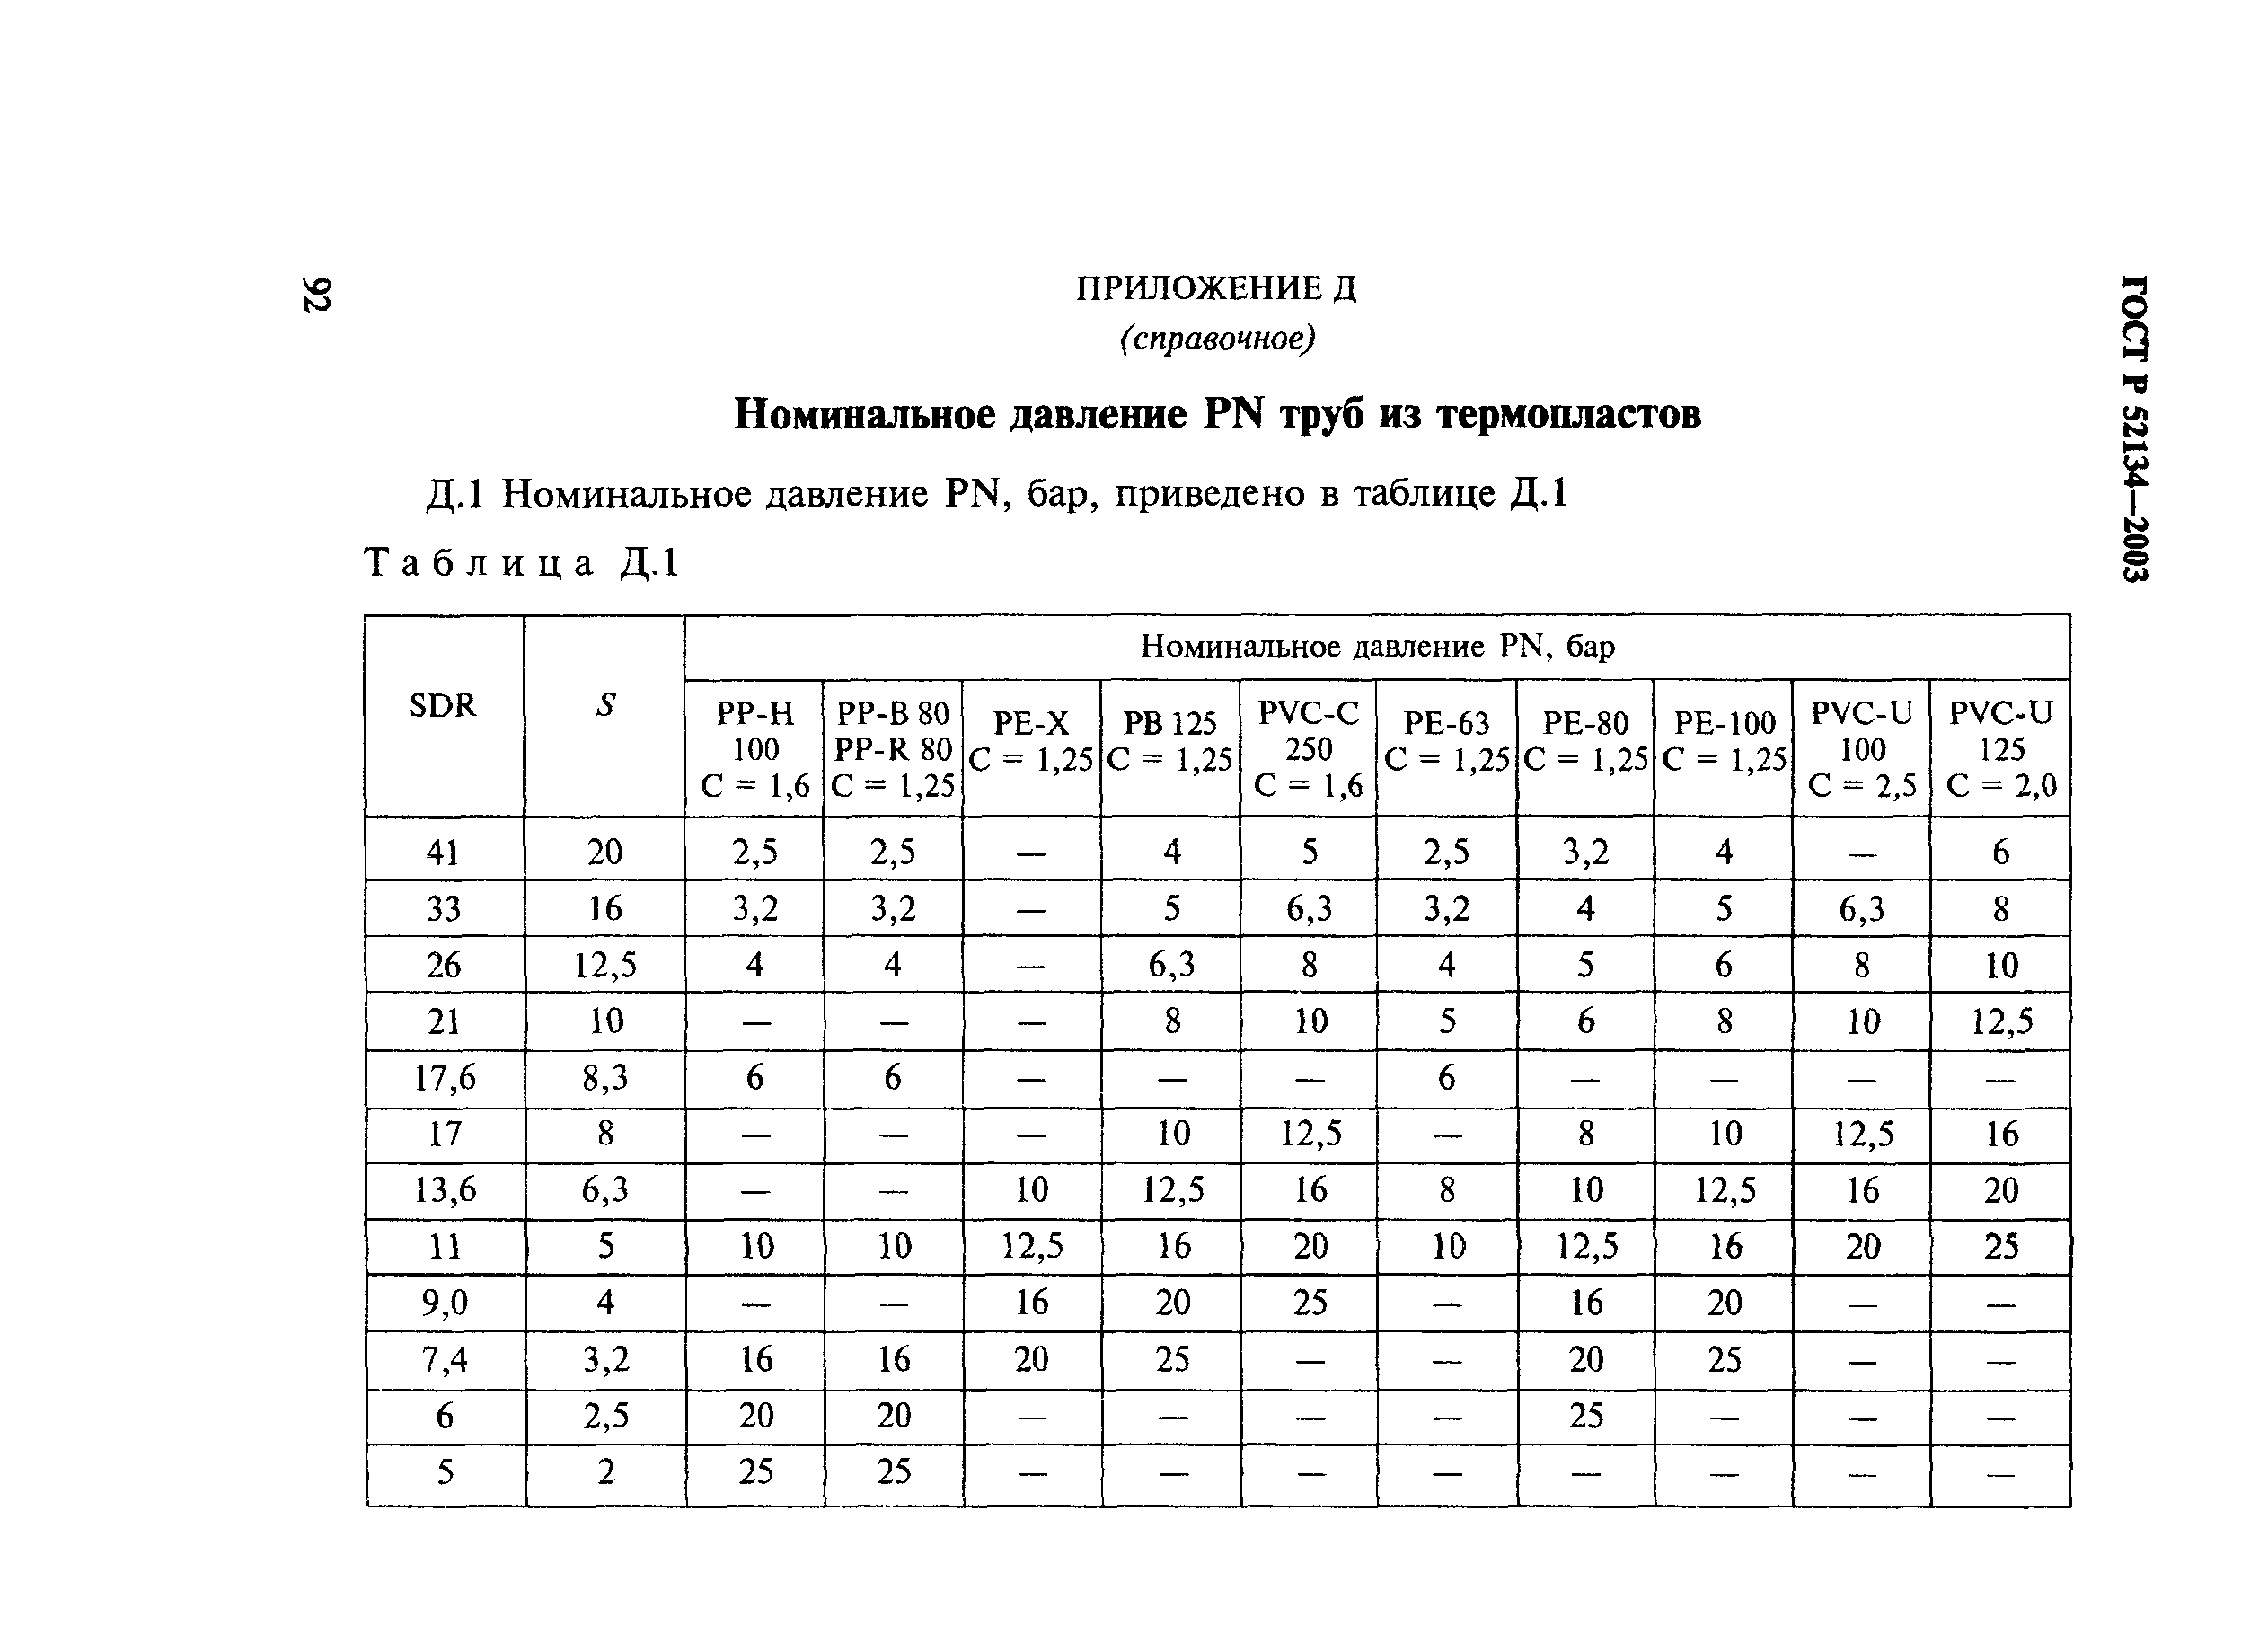 ГОСТ Р 52134-2003